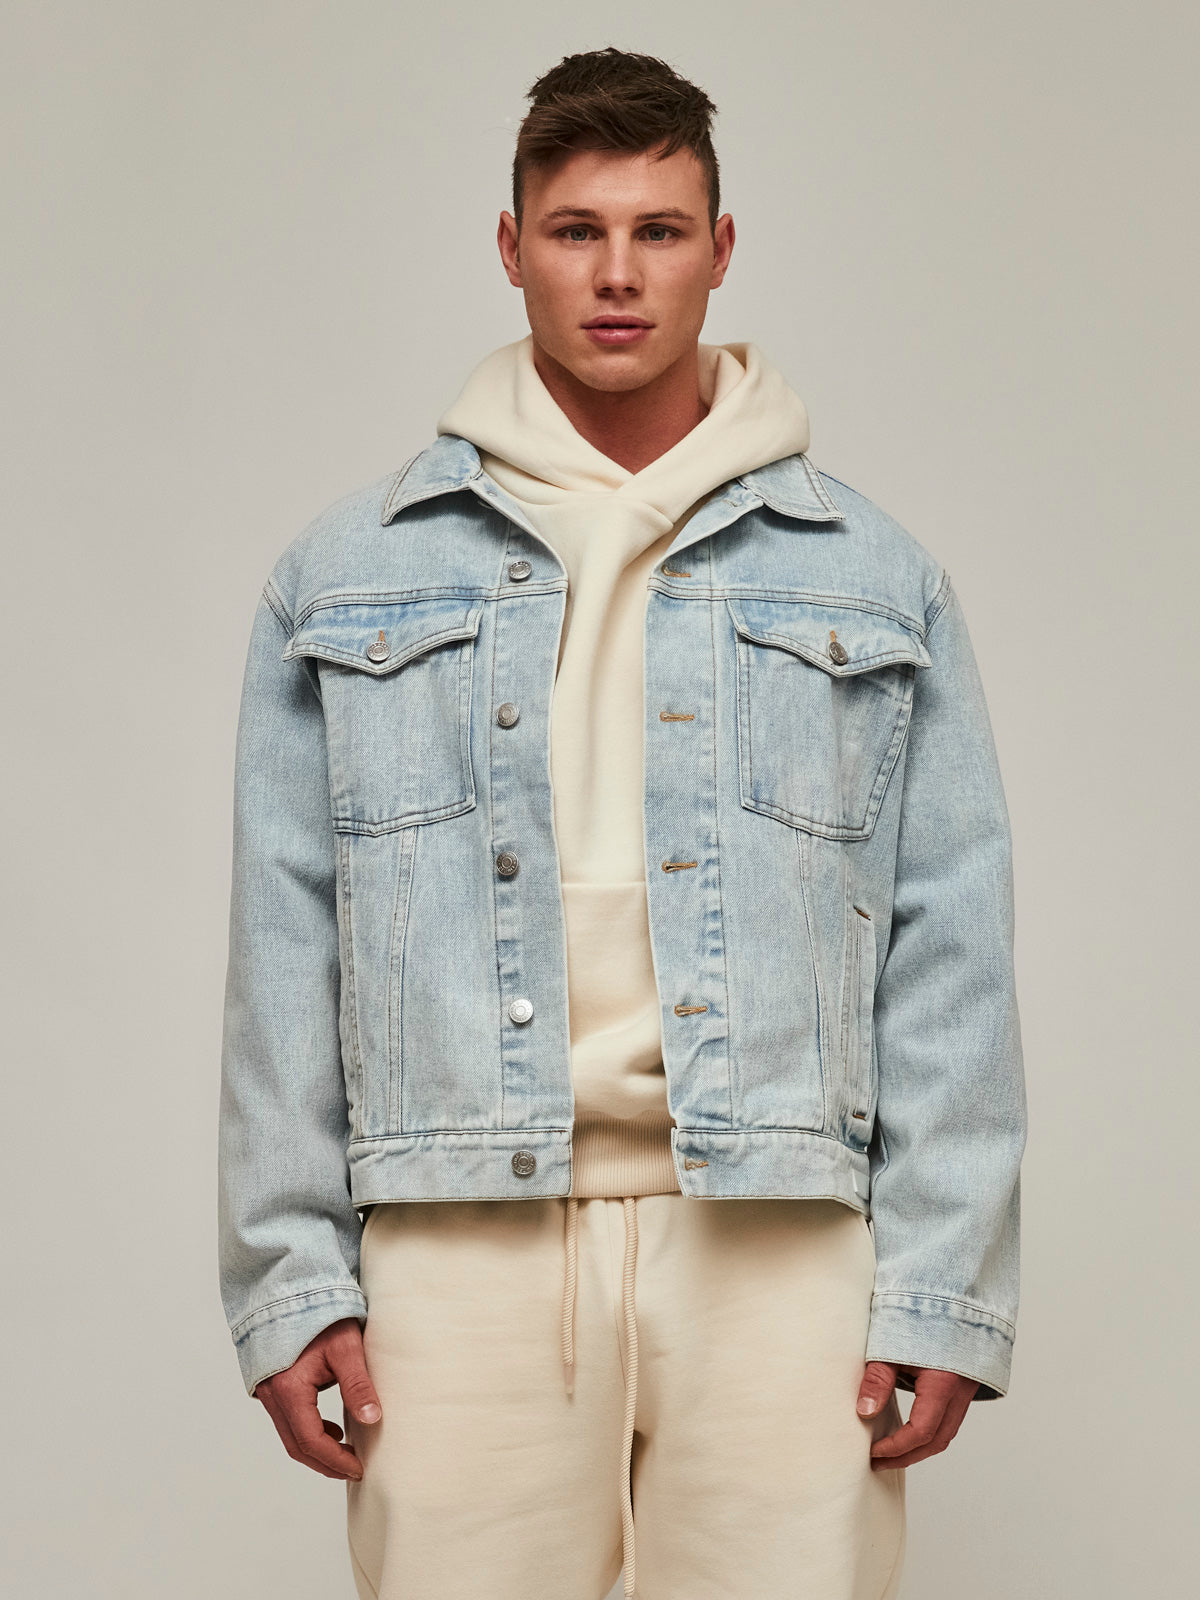 Alaska Blue Jeans jacket/ LMTD edition